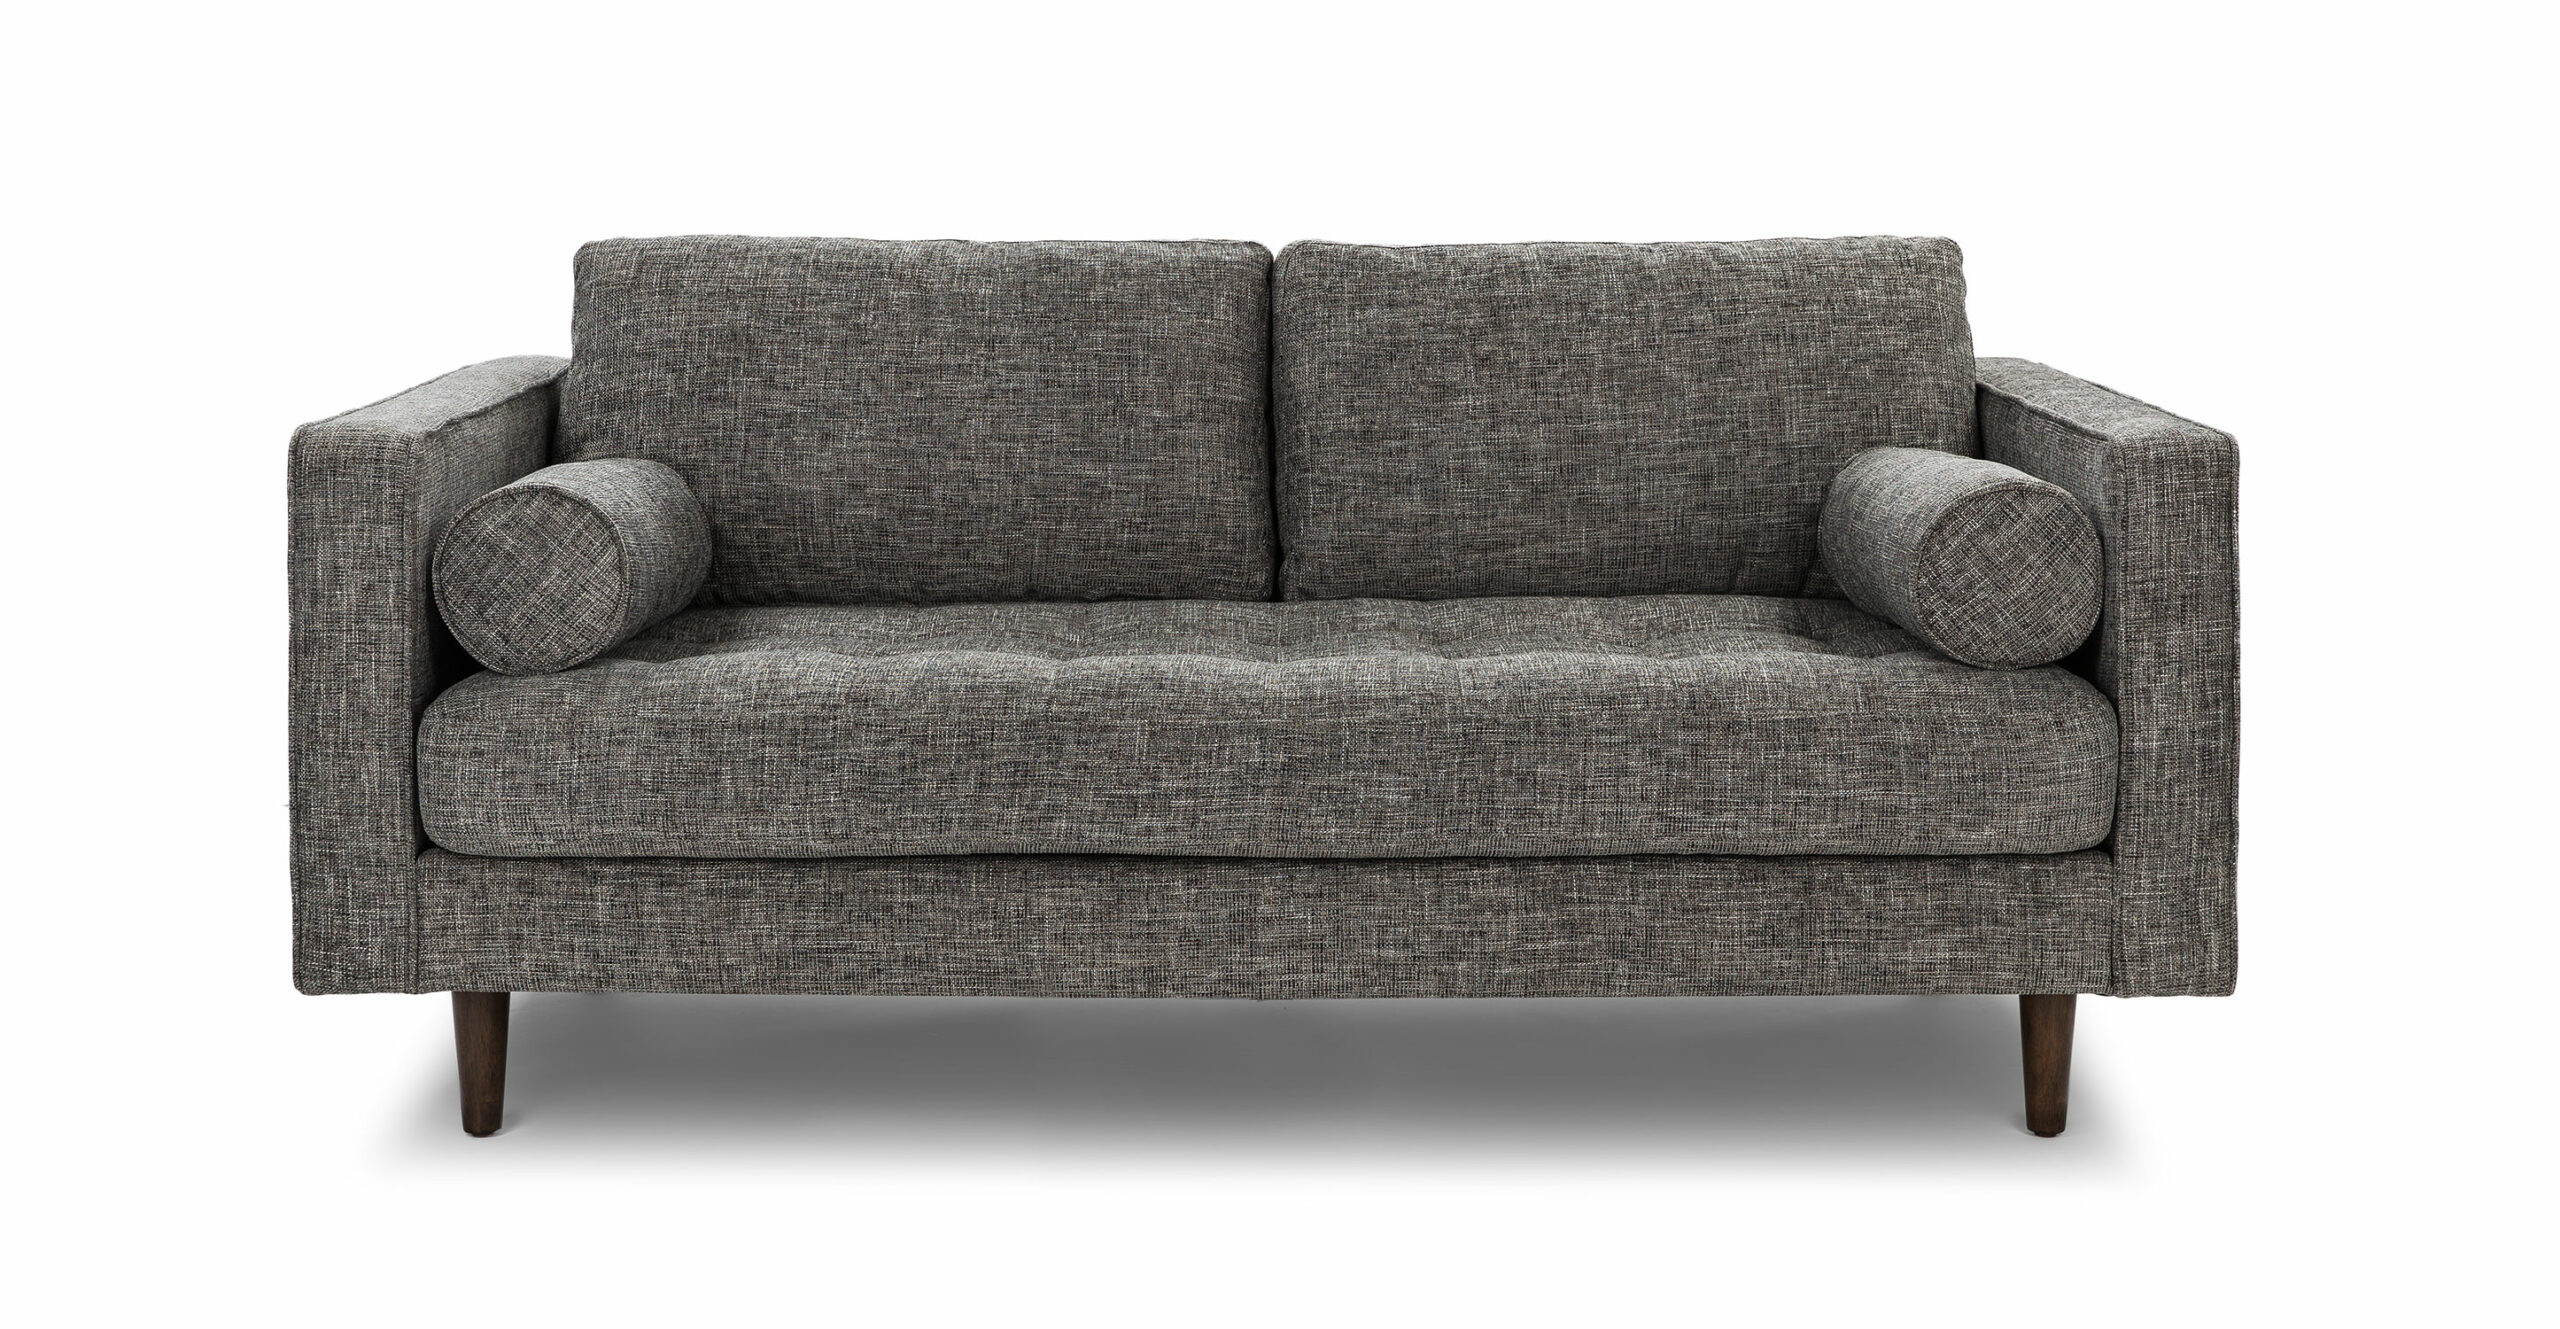 classic sofa set